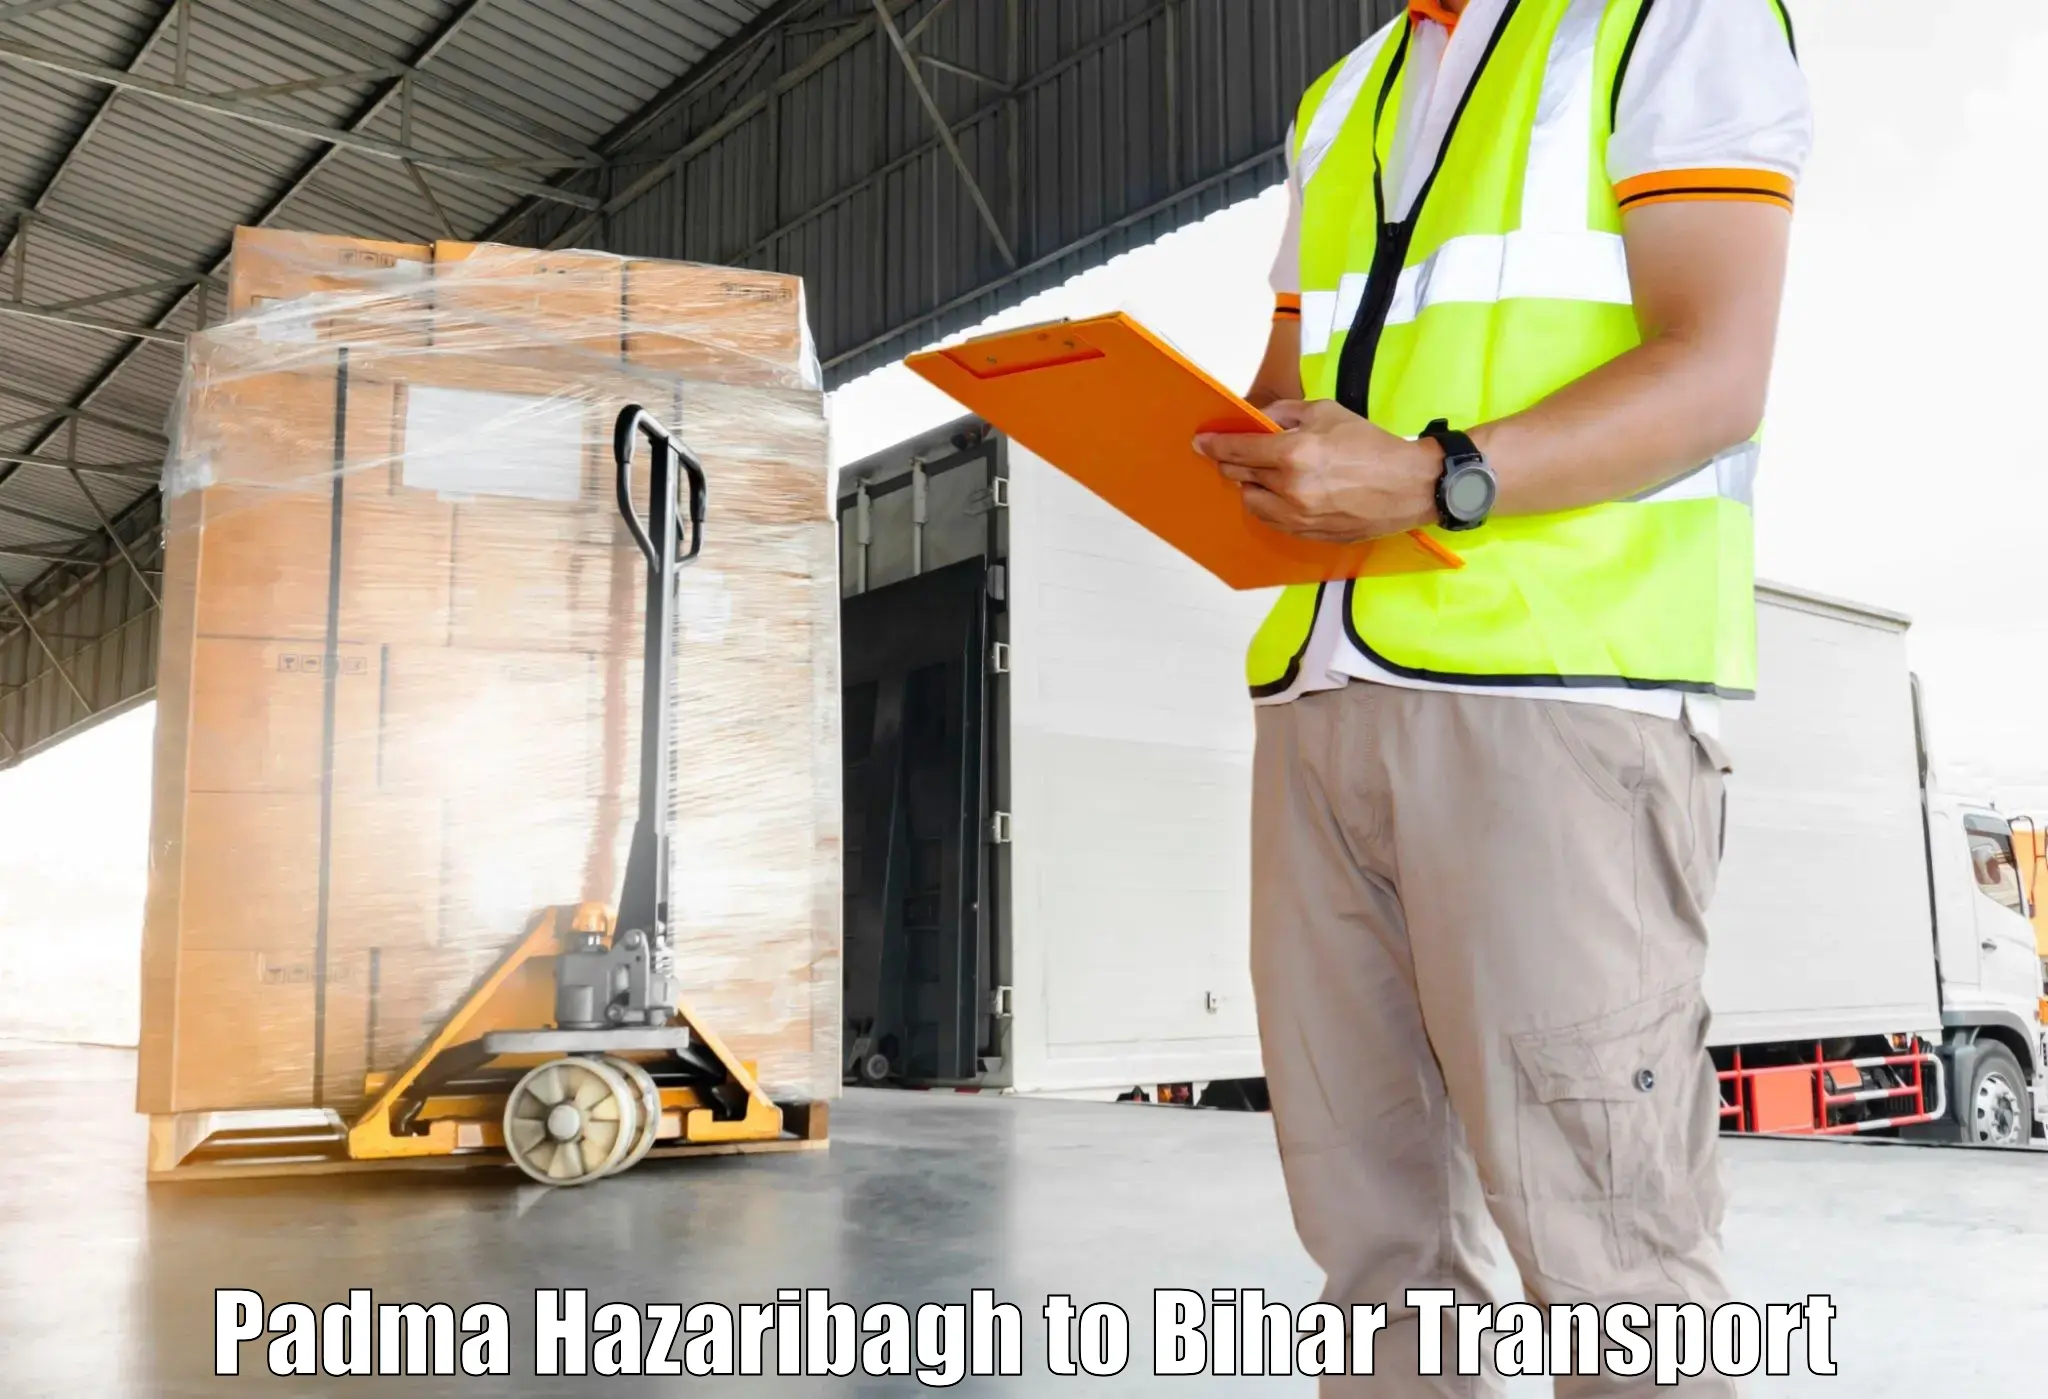 Transport in sharing Padma Hazaribagh to Barhiya